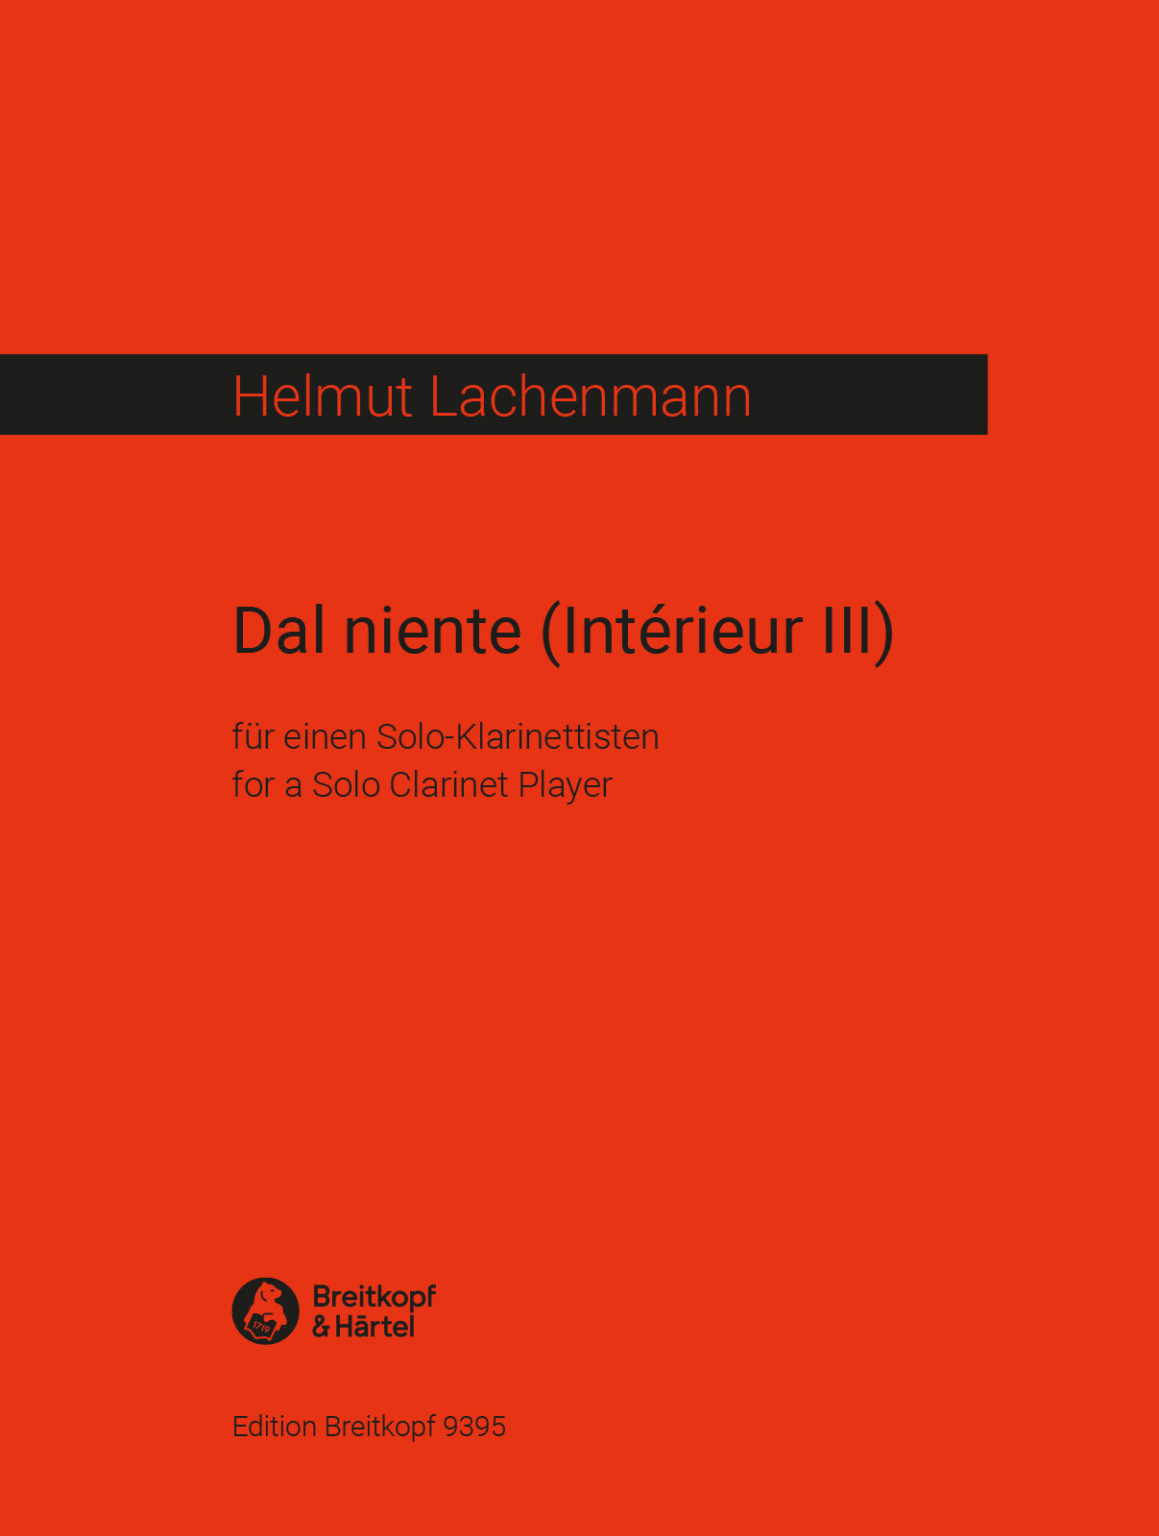 Dal Niente, Interieur III (1970) para un clarinetista solista. Helmut Lachenmann